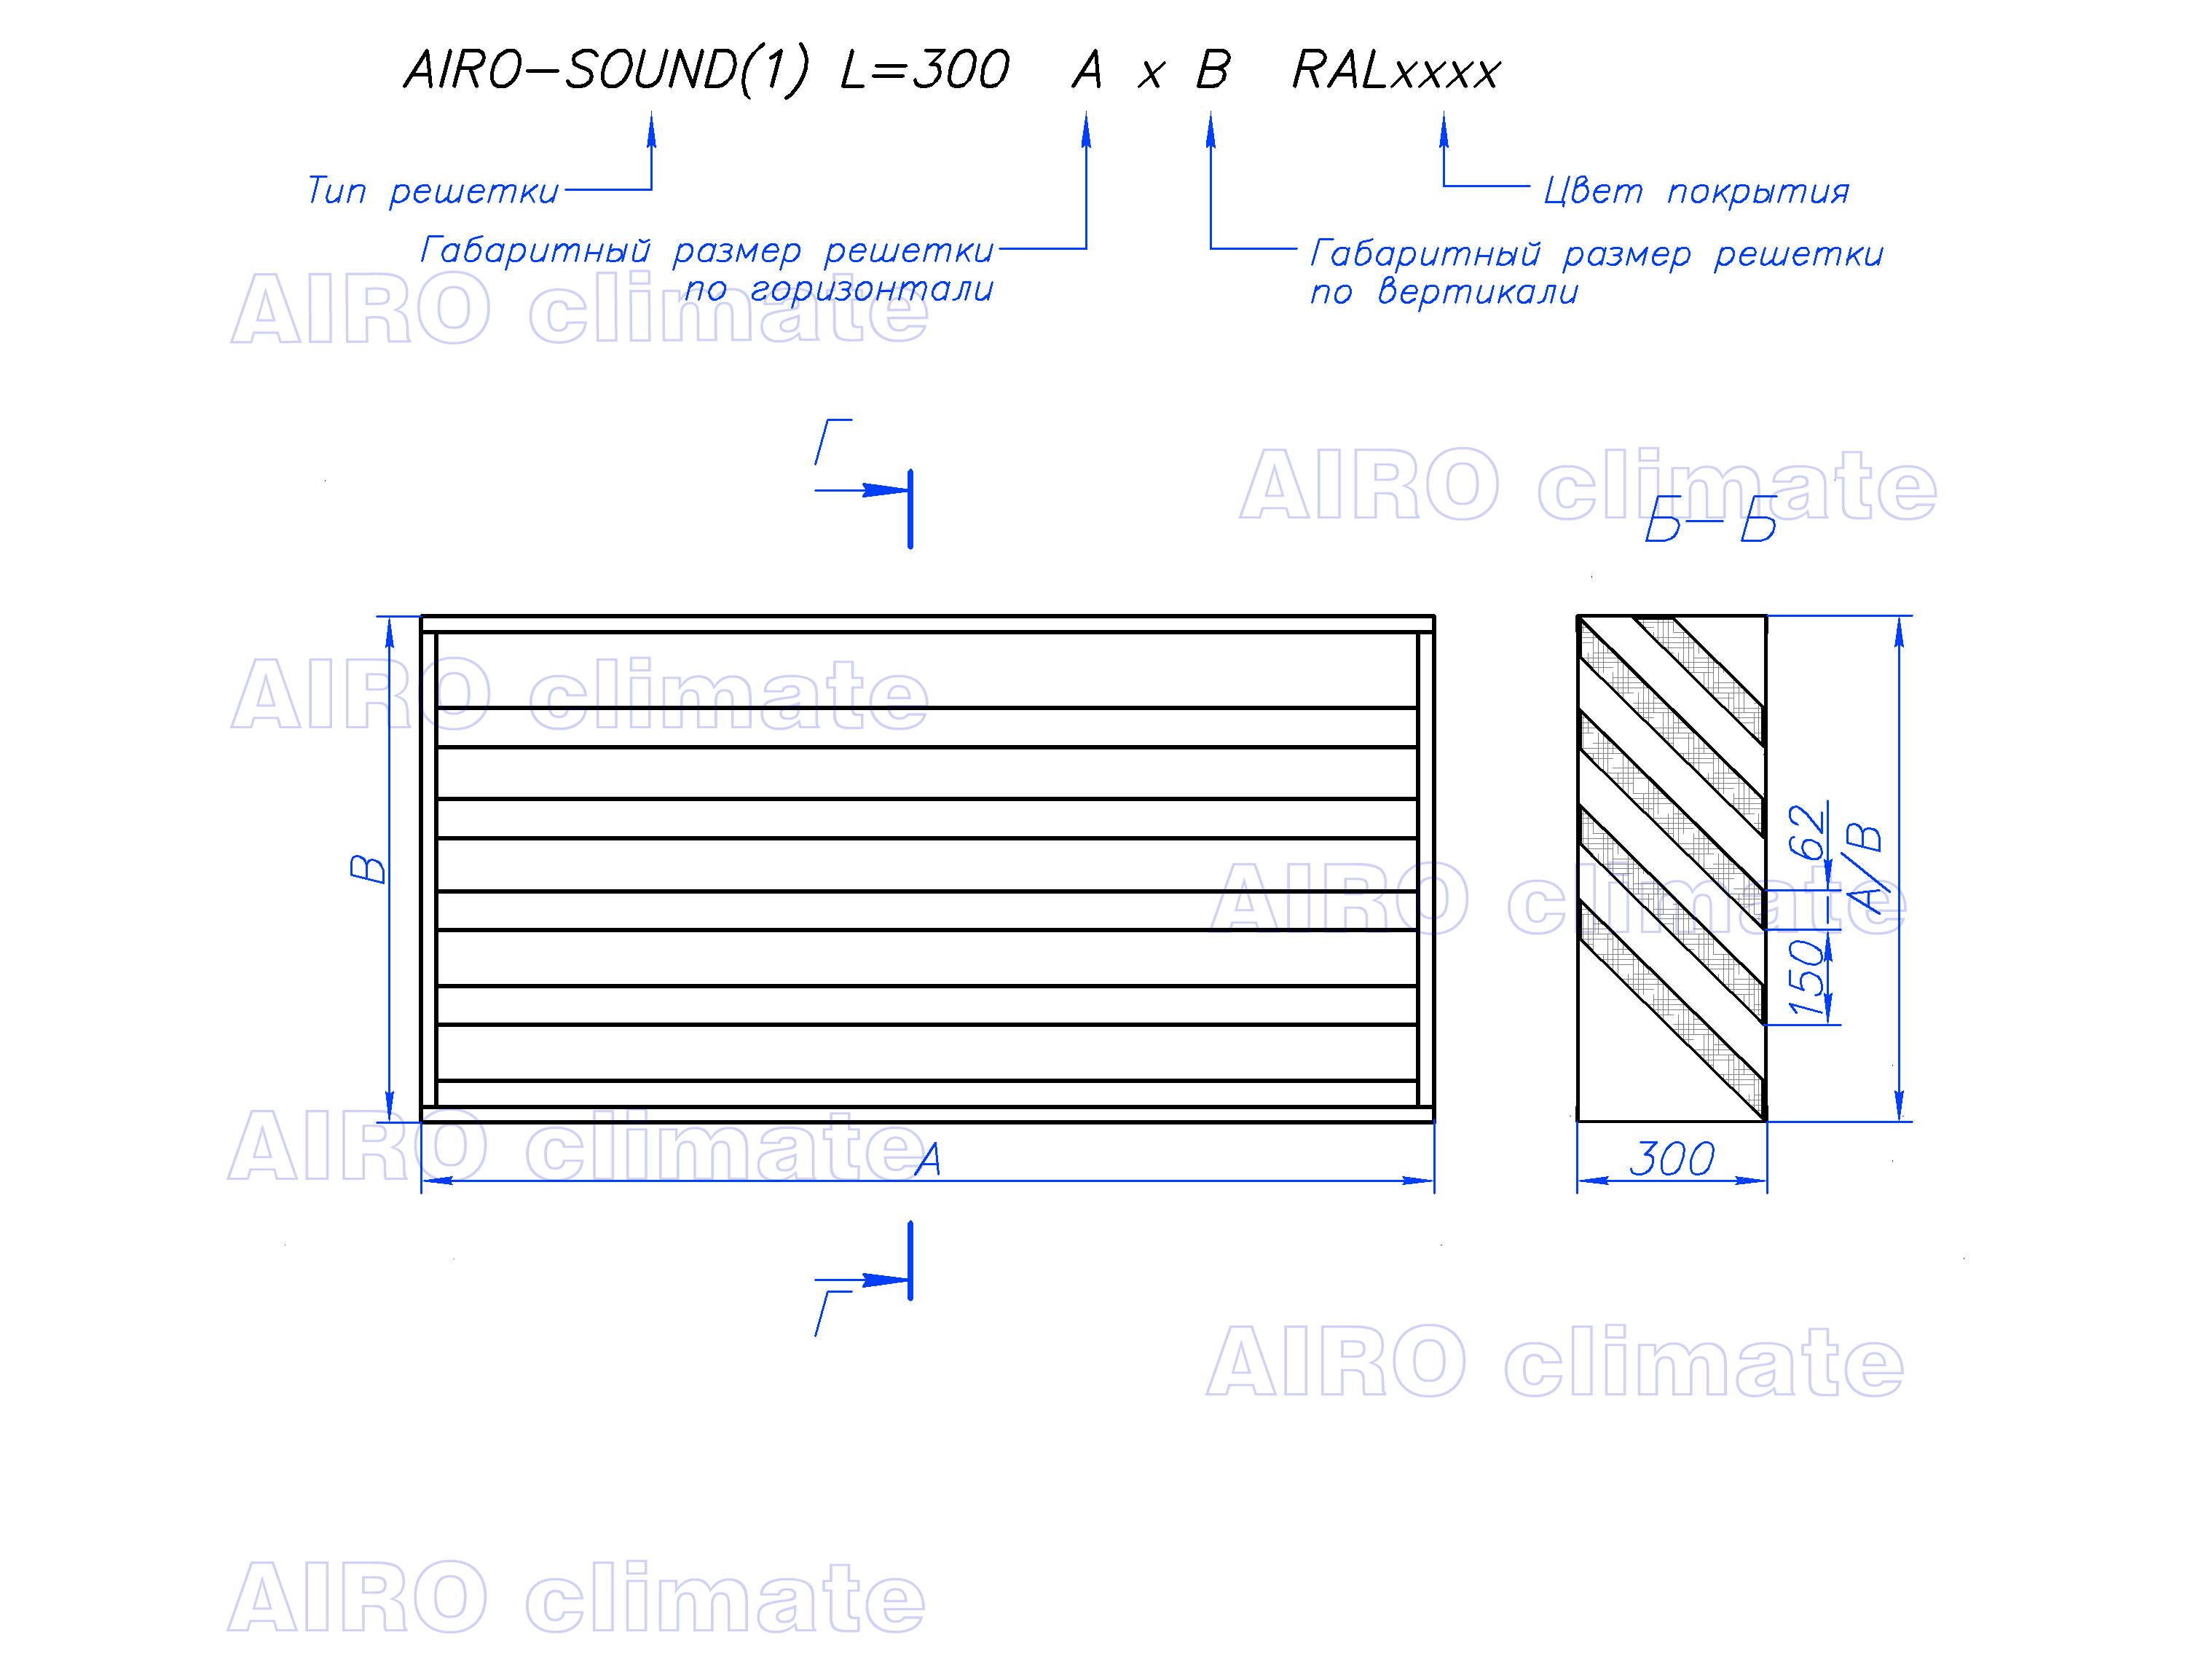 Чертеж звукопоглощающей решетки для вентиляции AIRO-SOUND(1) L=300